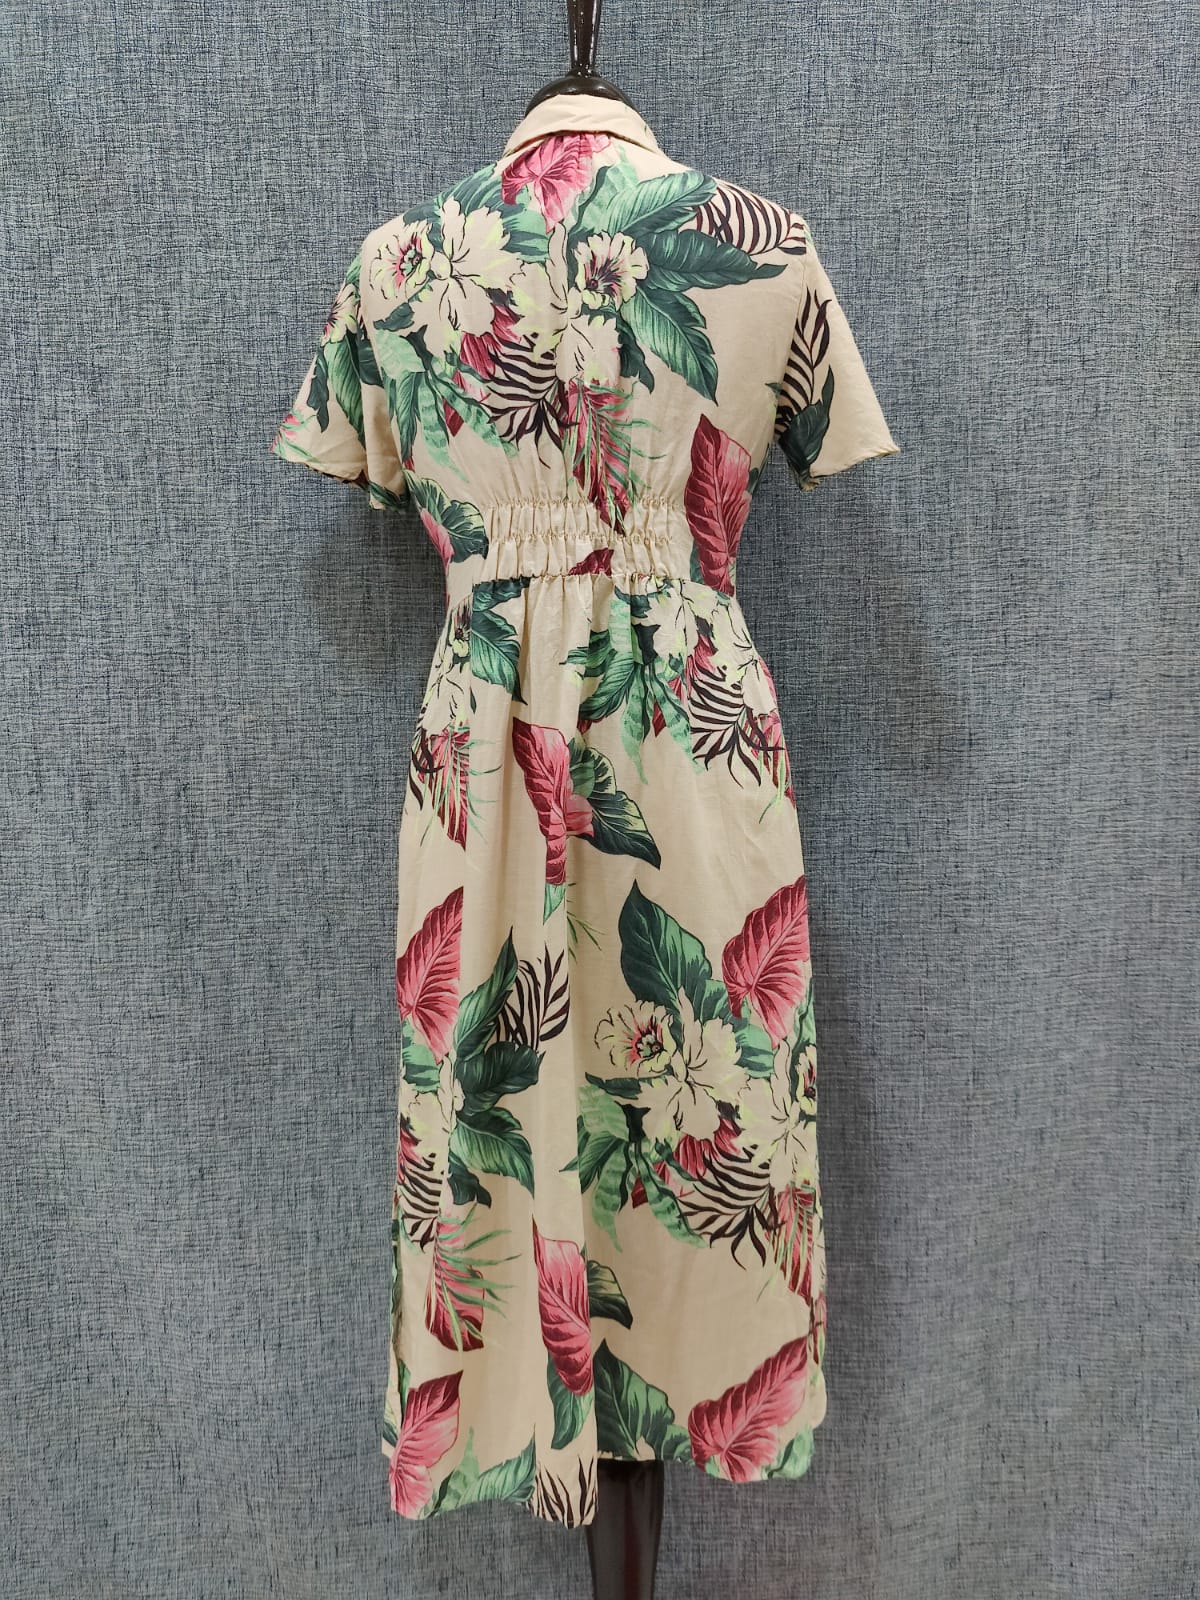 ZARA Light Peach Floral Printed Buttoned Dress | Relove